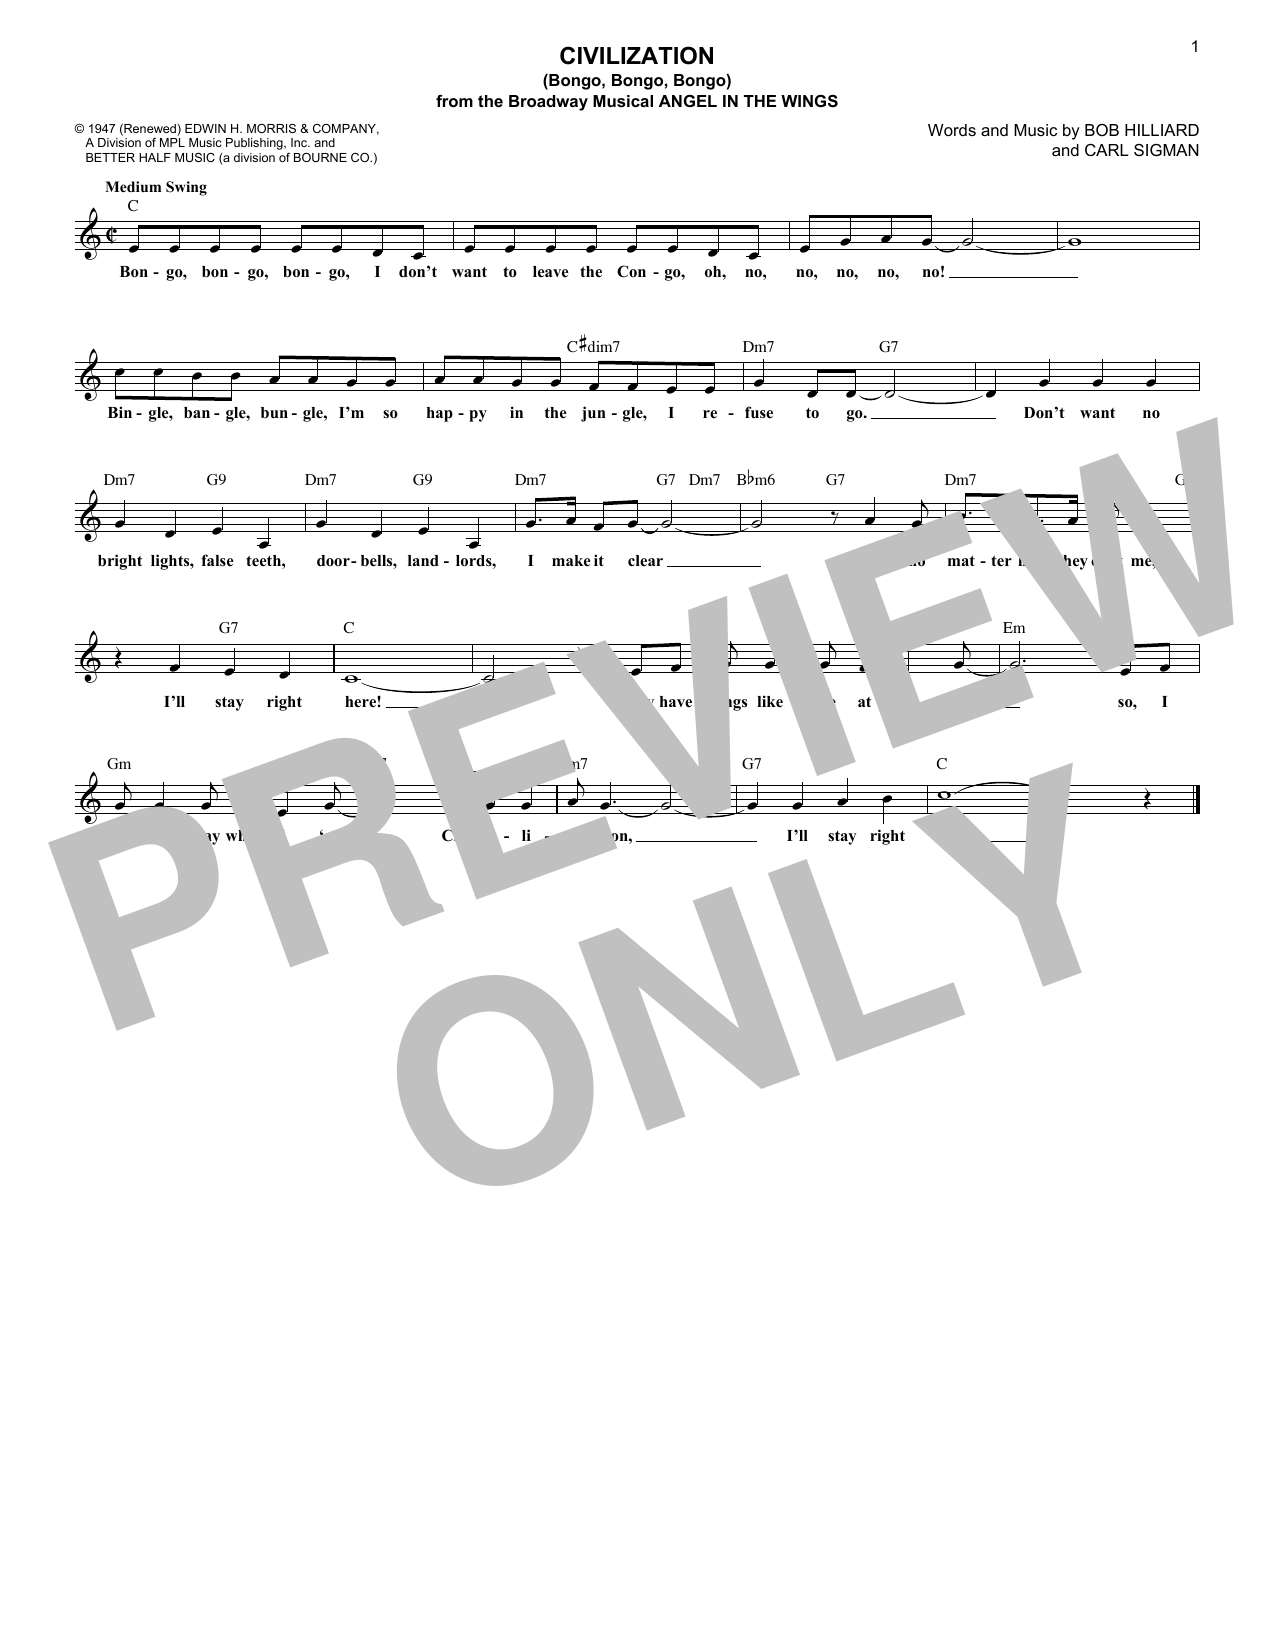 Bob Hilliard Civilization (Bongo, Bongo, Bongo) sheet music notes and chords arranged for Lead Sheet / Fake Book